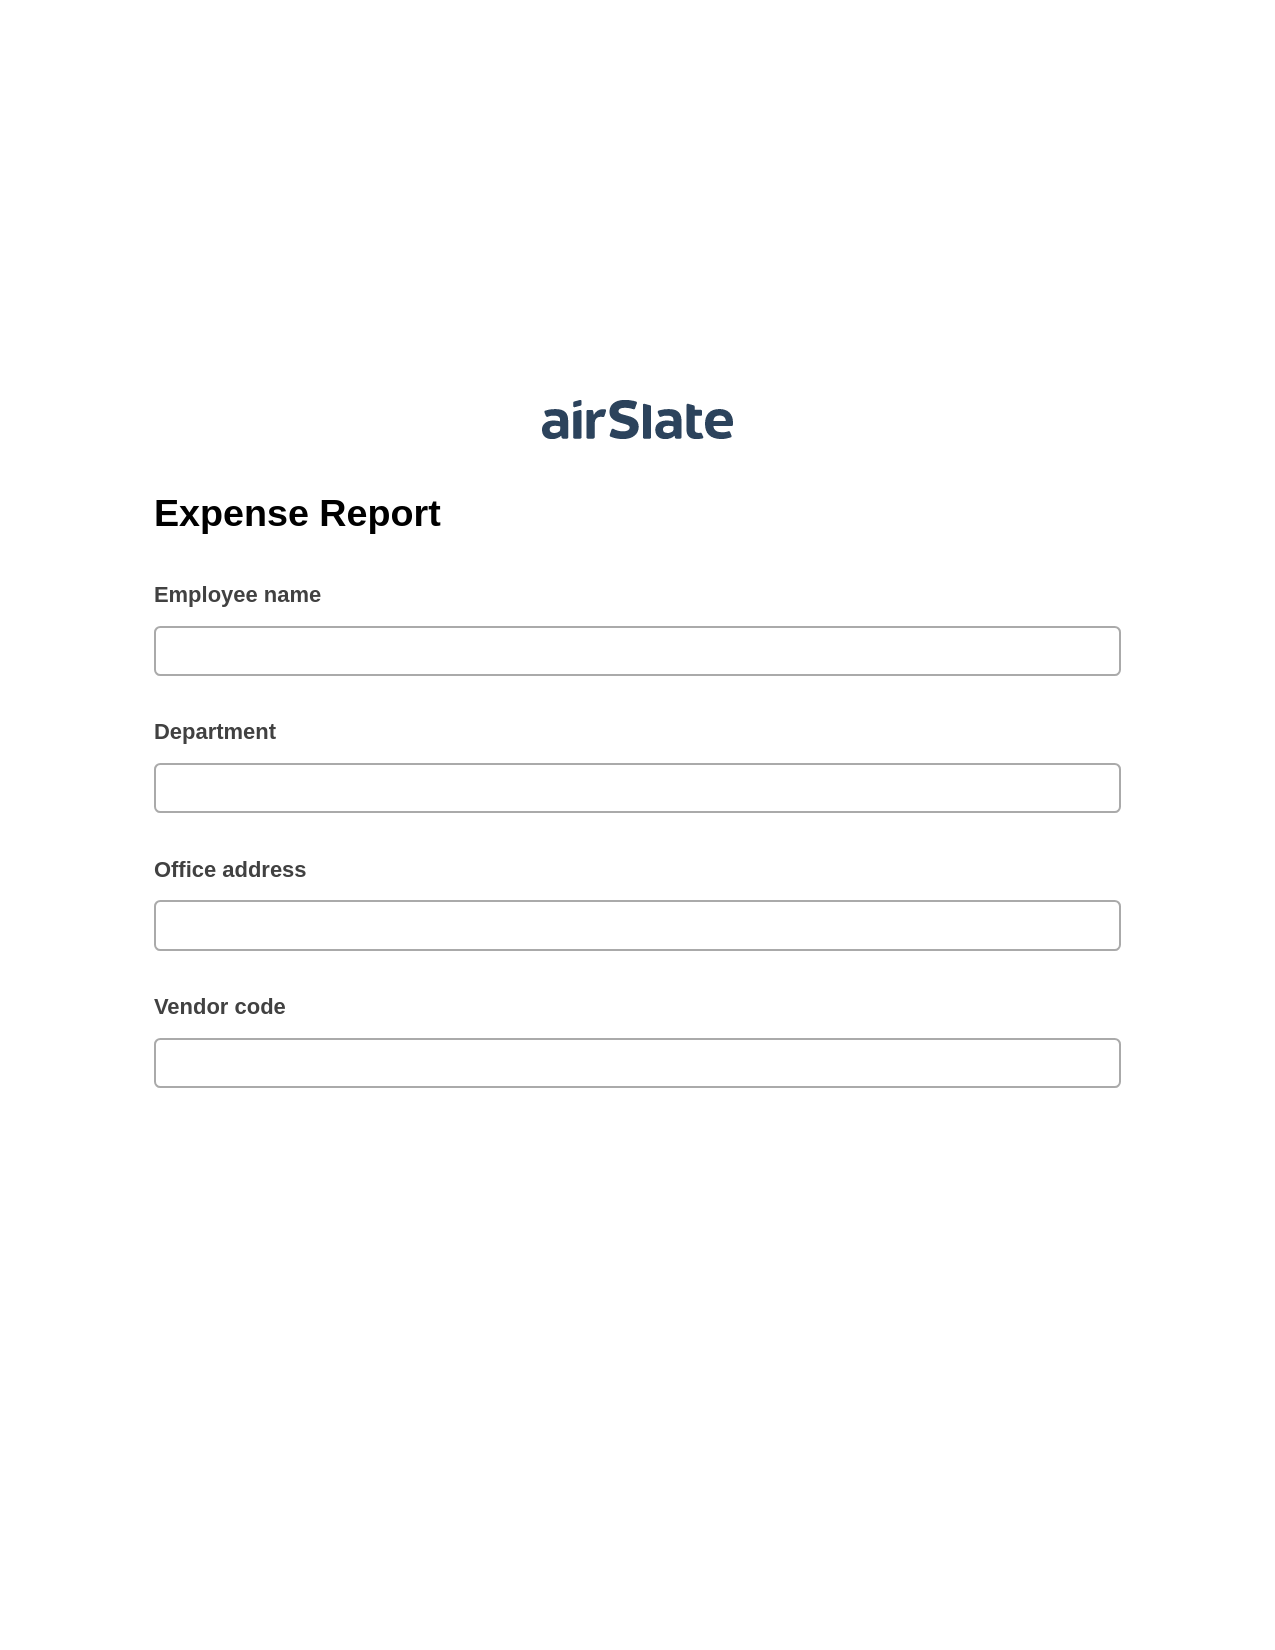 Multirole Expense Report Pre-fill Slate from MS Dynamics 365 Records Bot, SendGrid send Campaign bot, Slack Notification Postfinish Bot